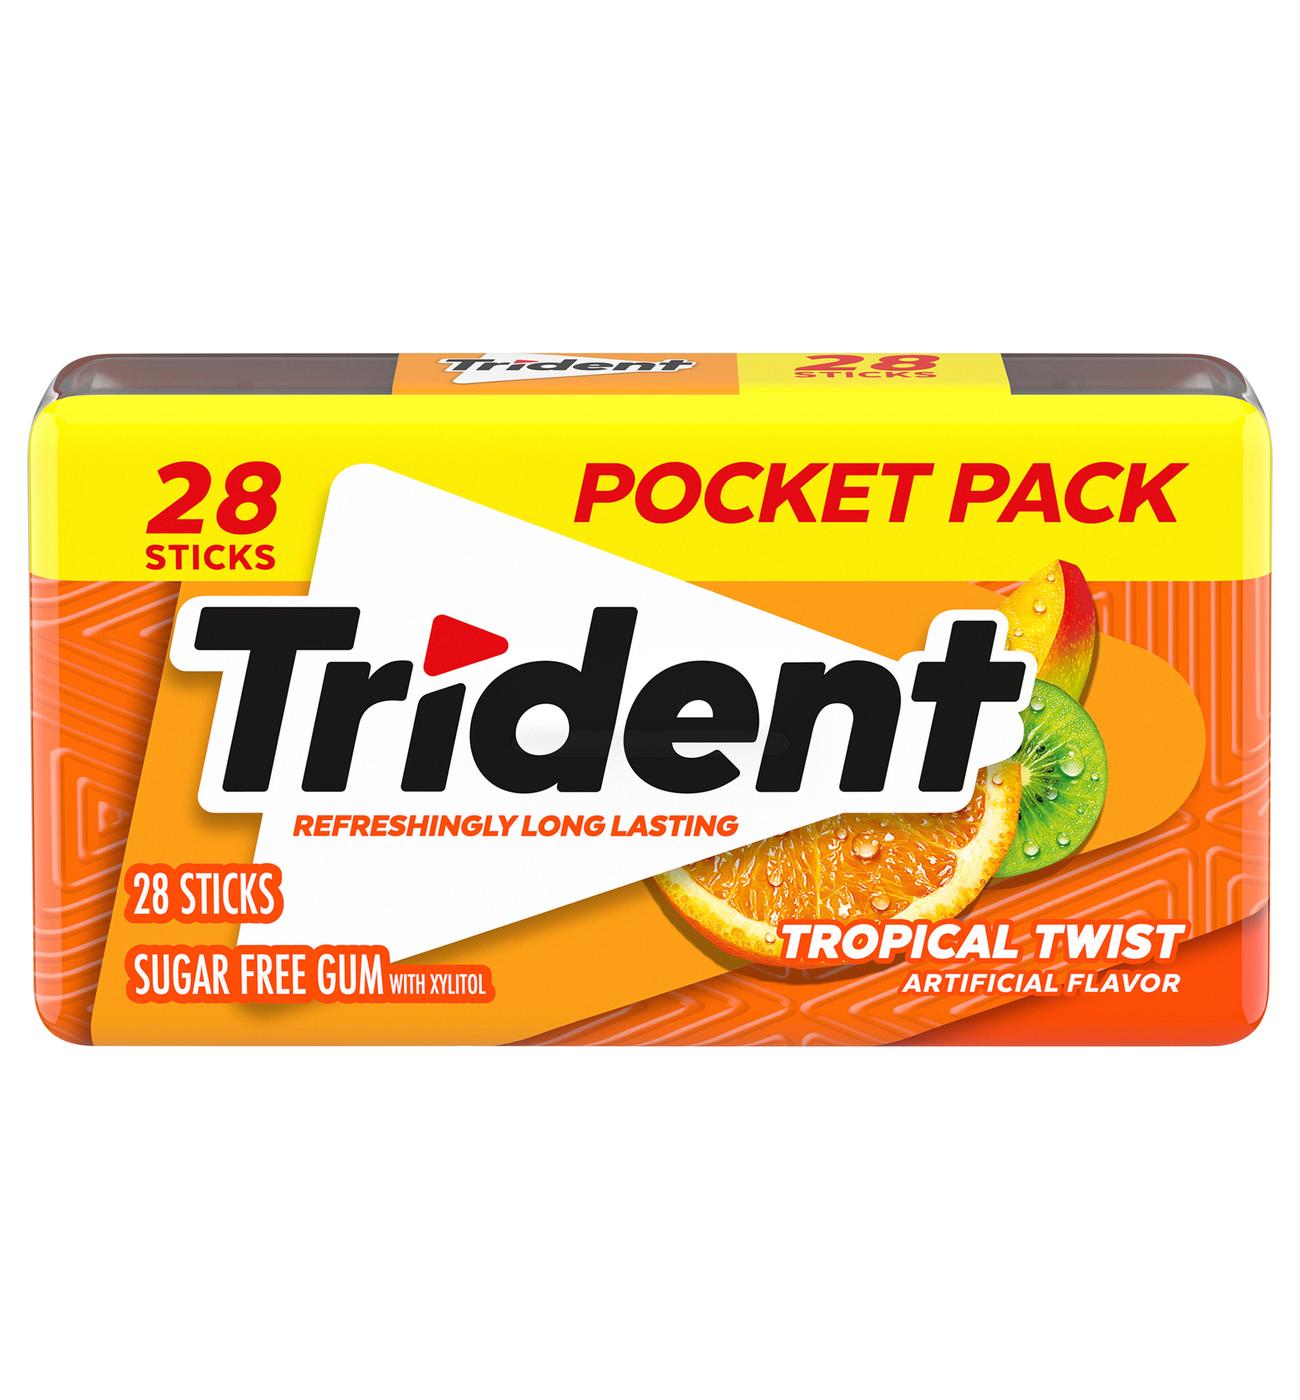 Trident Tropical Twist Flavor Pocket Pack Gum; image 1 of 2